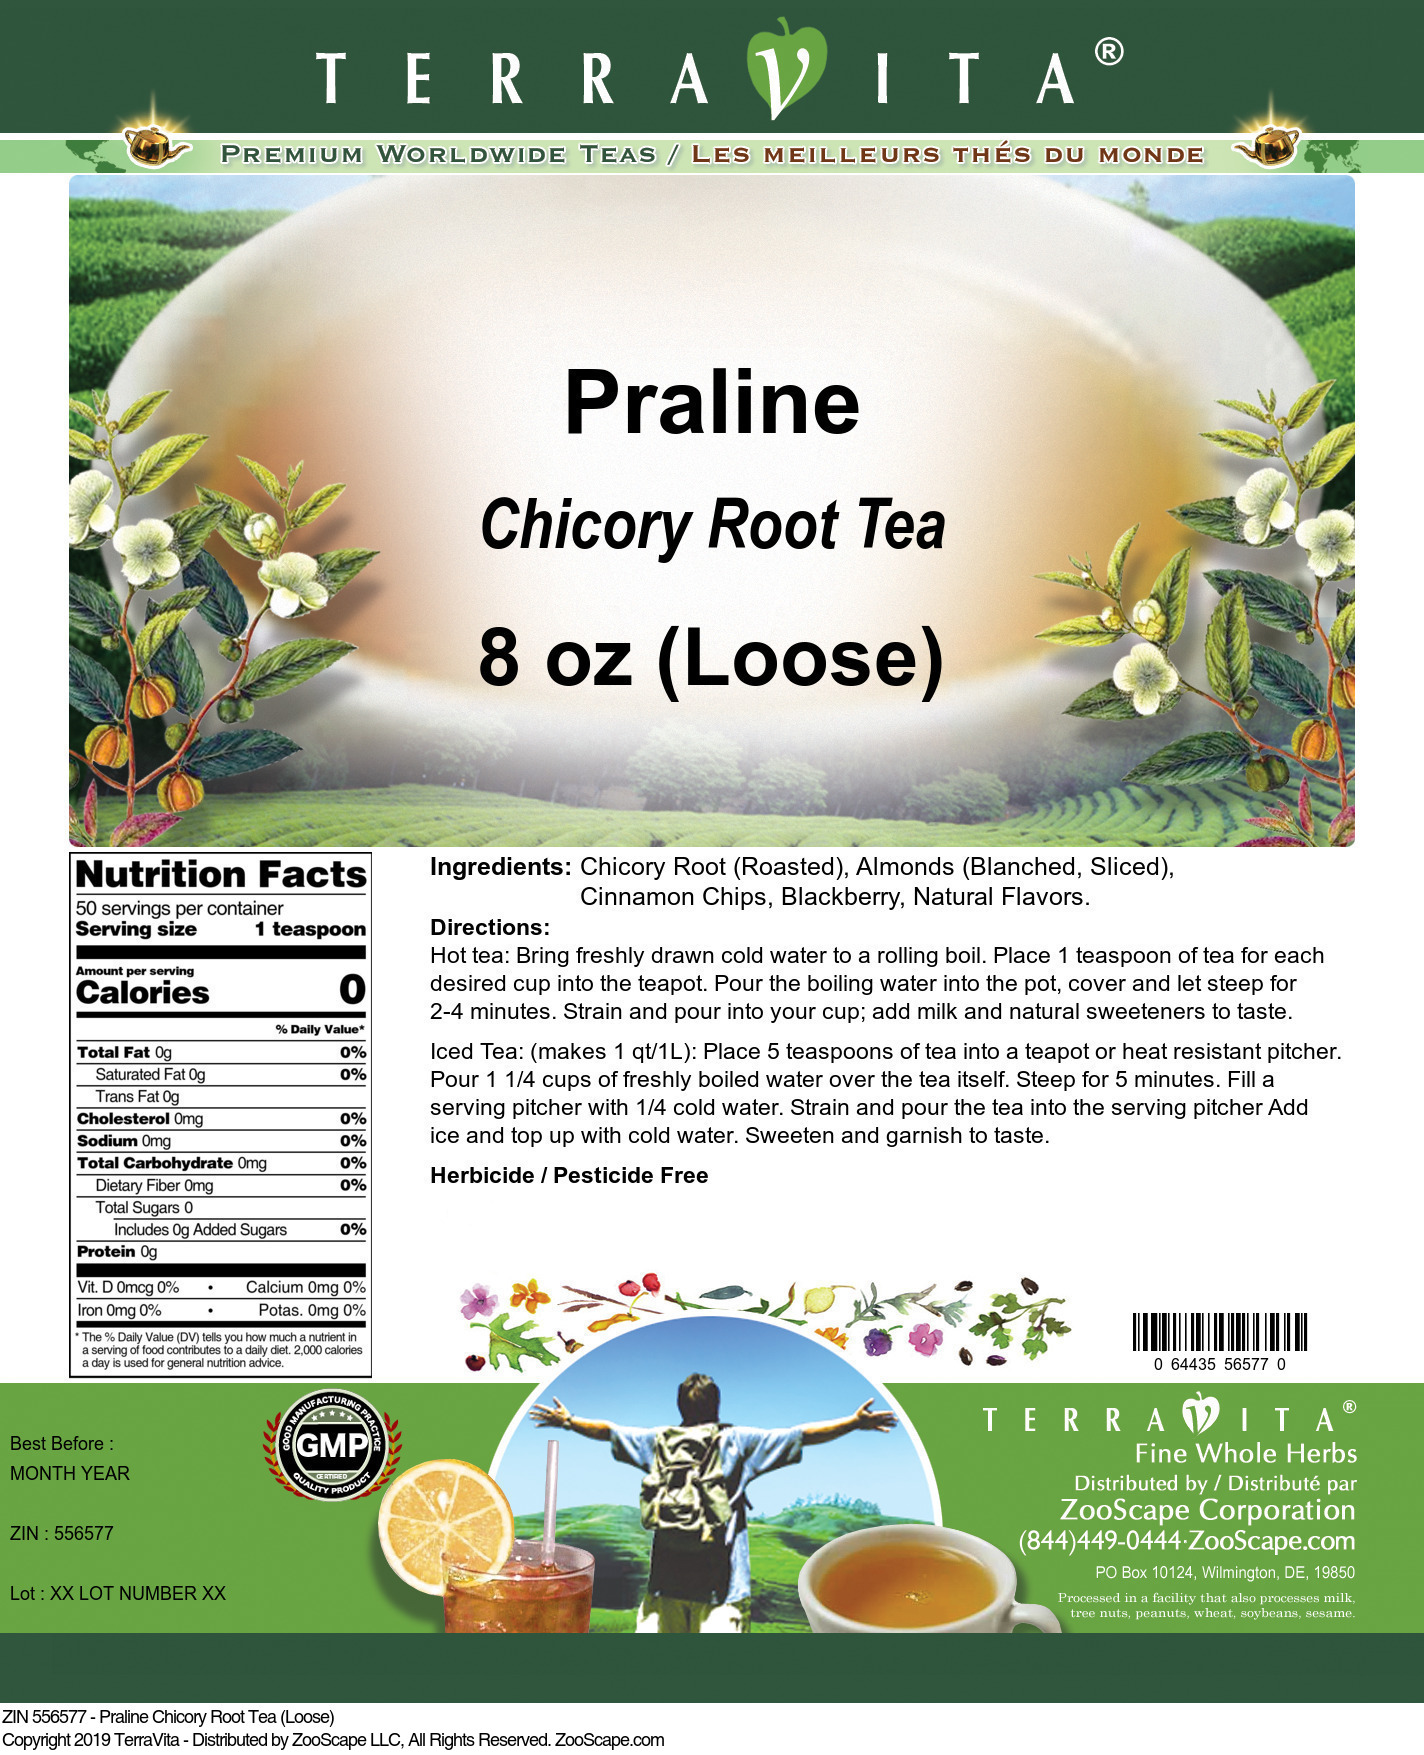 Praline Chicory Root Tea (Loose) - Label